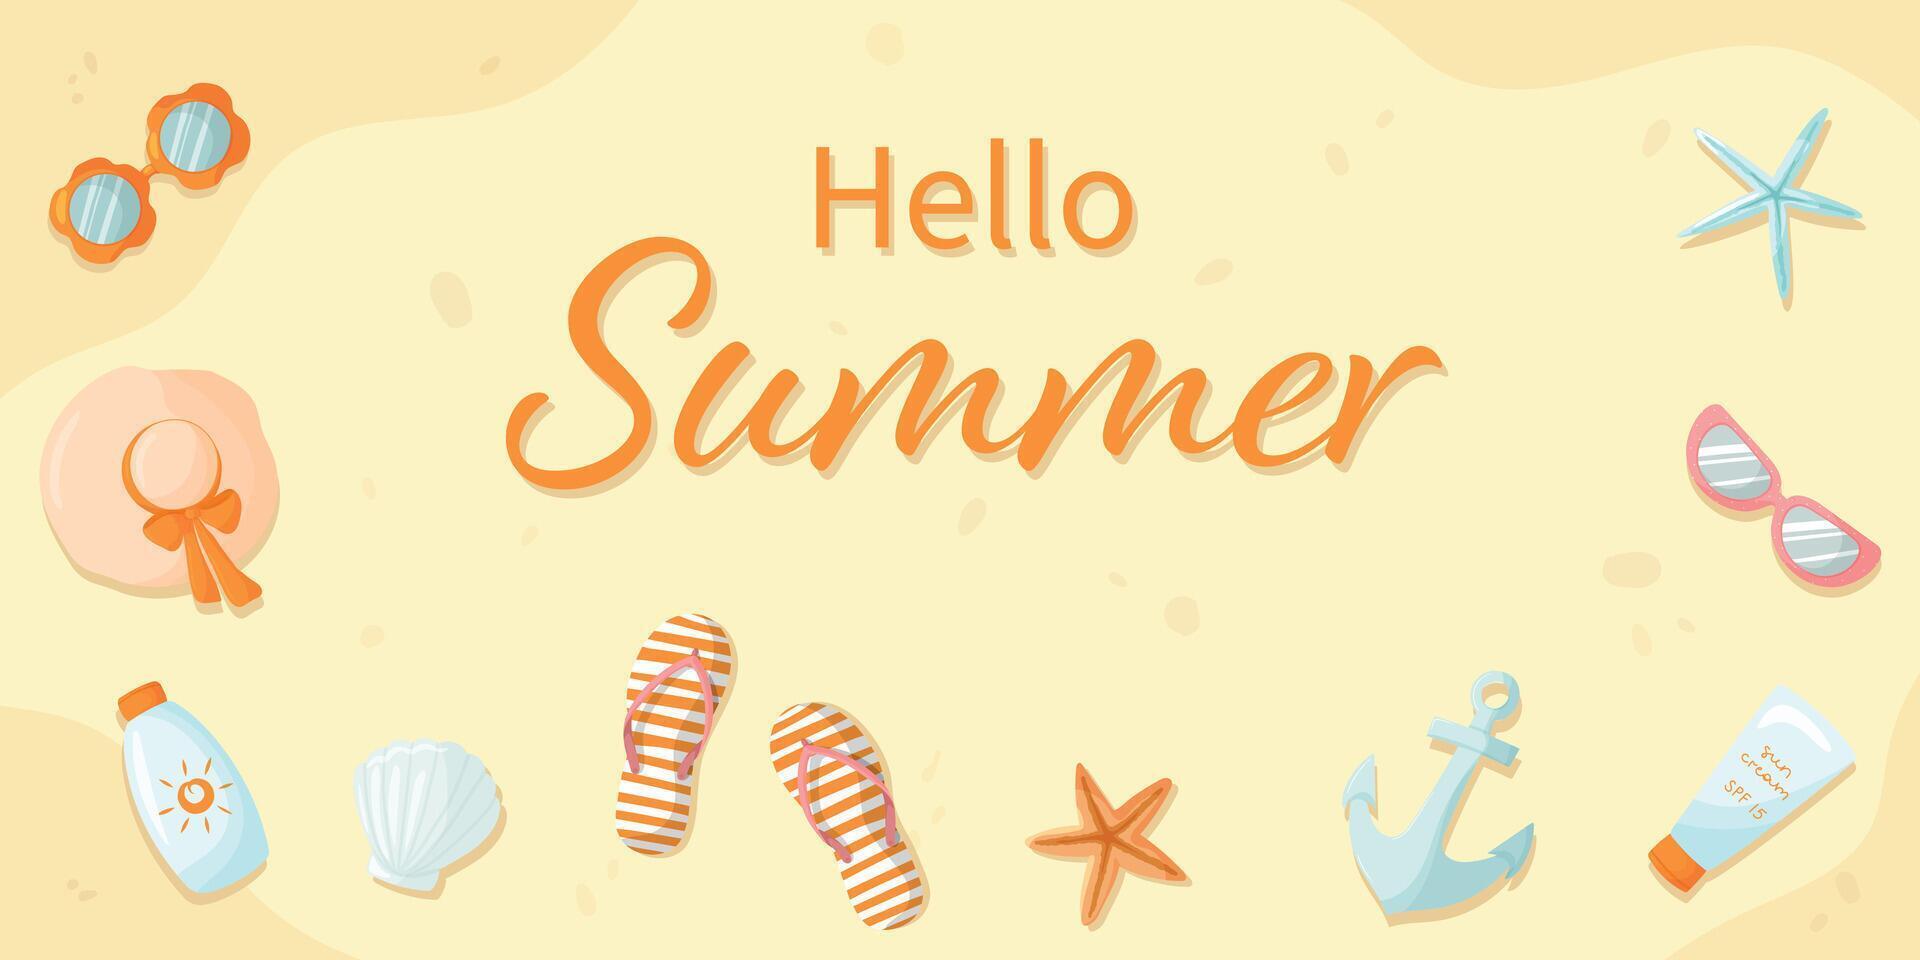 Hello summer banner. Summer greeting vector background. Hello summer text with beach accessories, flip flops, sunscreen, starfish, sunglasses, etc. Beach accessories on the sandy beach. Top View.